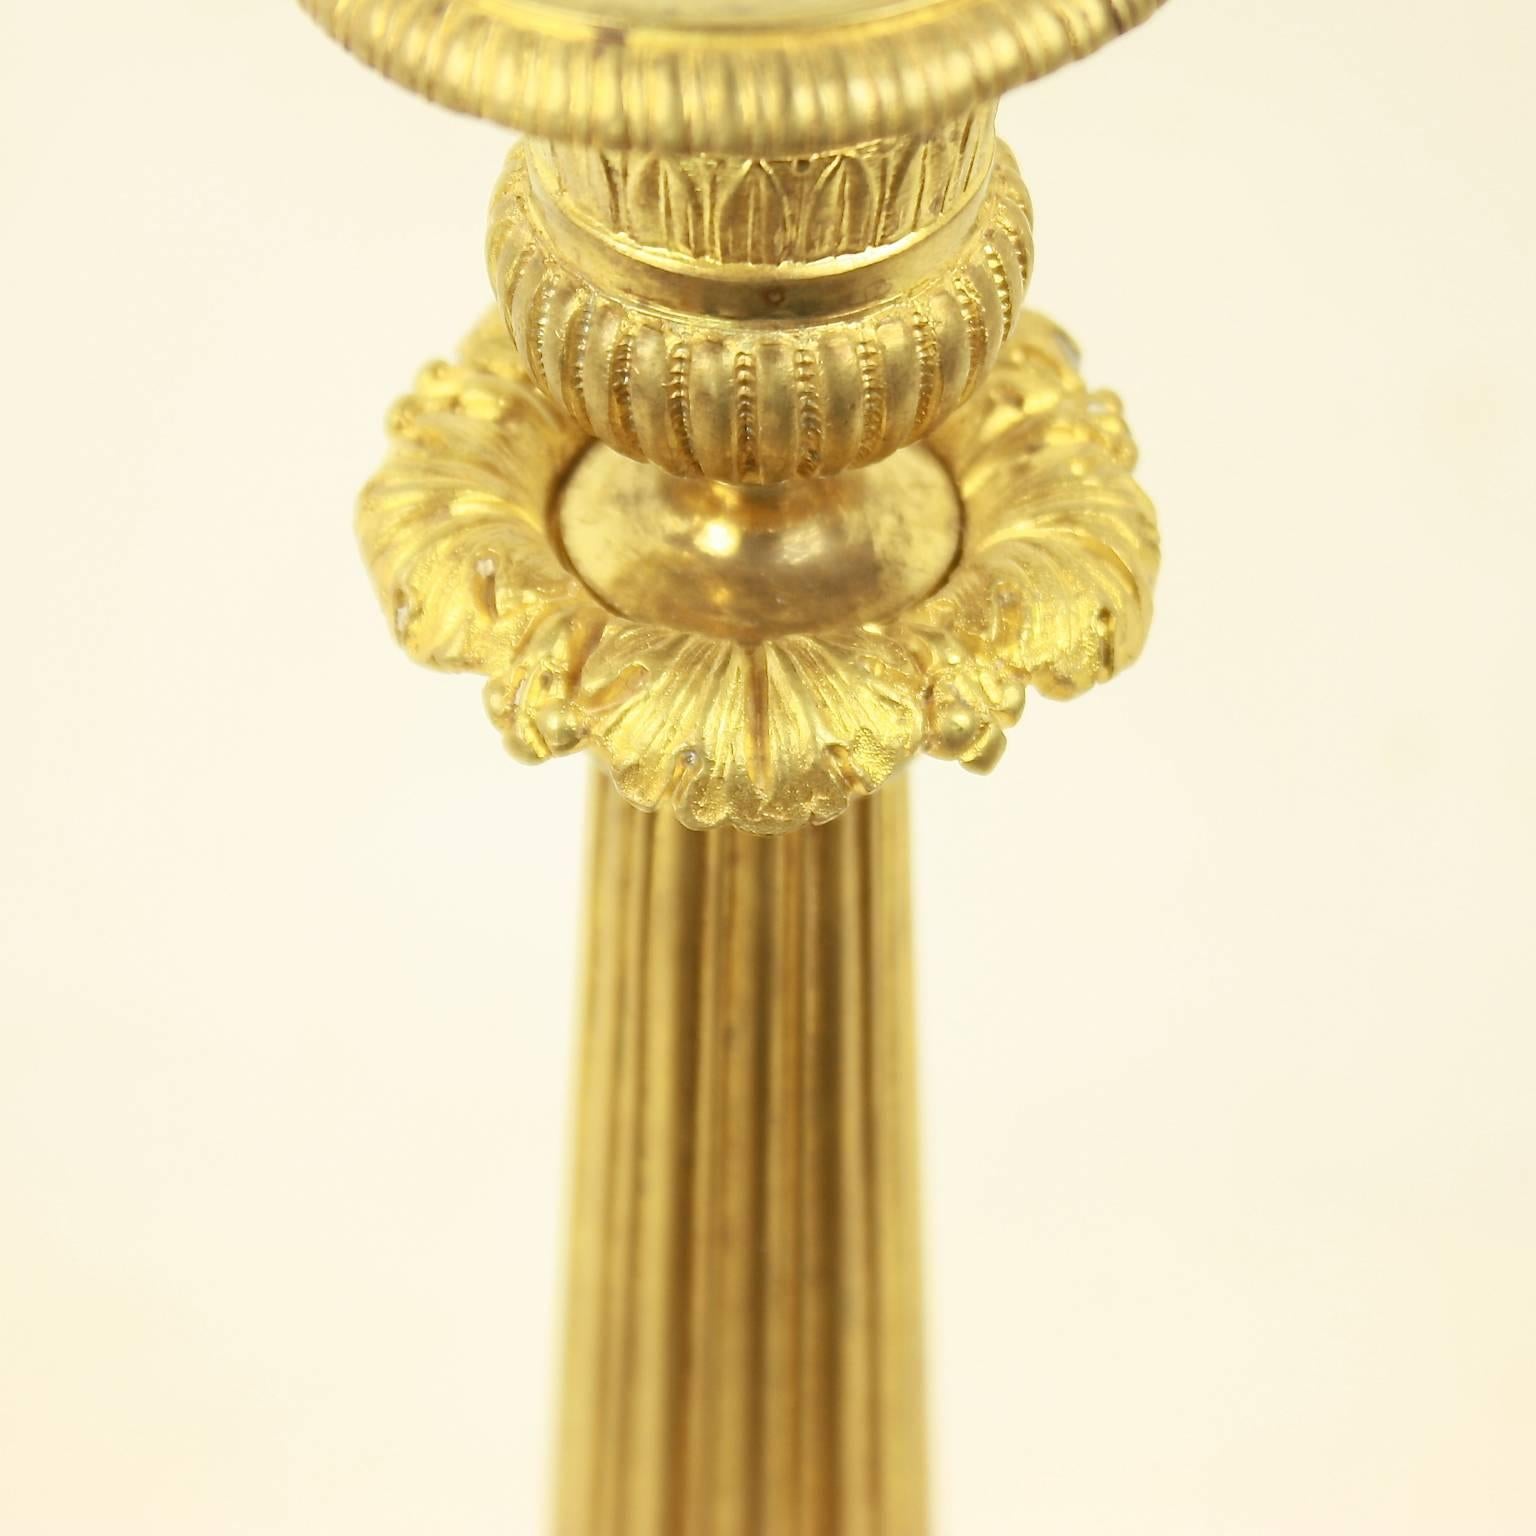 Pair of Empire Gilt Bronze Candlesticks (Vergoldet)